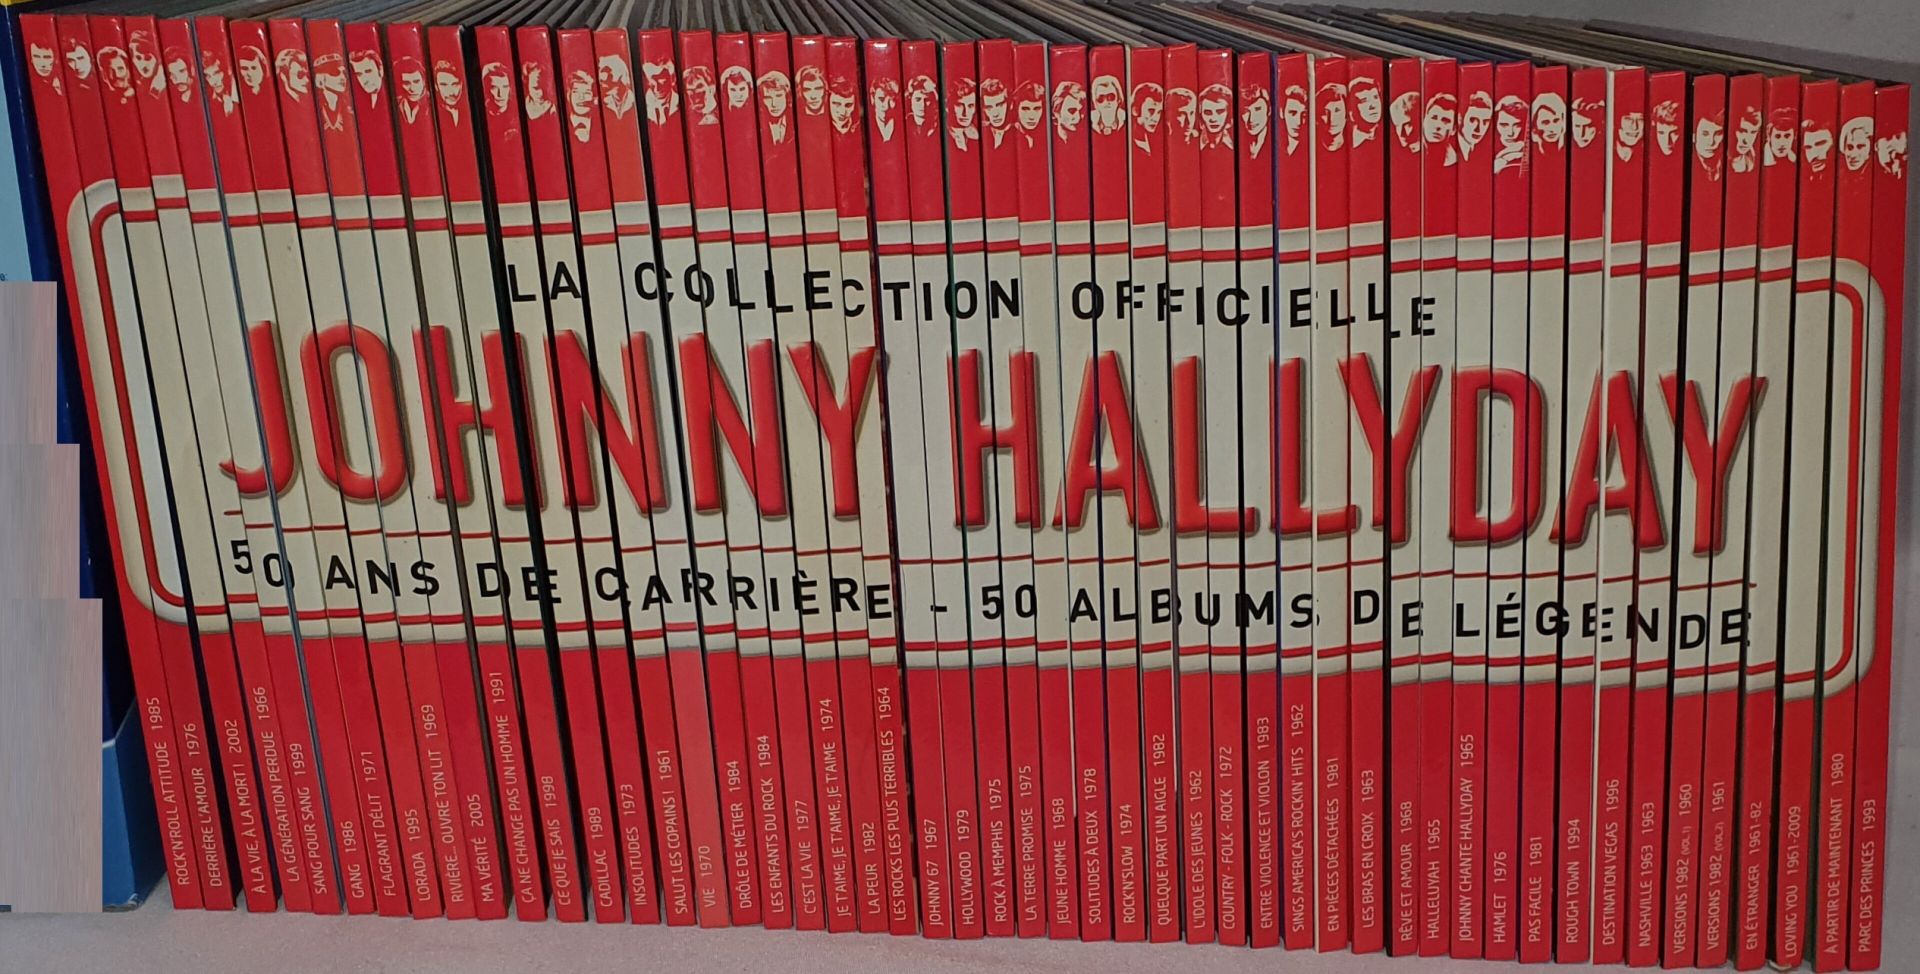 BELLE COLLECTION OFFICIELLE JOHNNY HALLYDAY 50 ALBUMS DE…